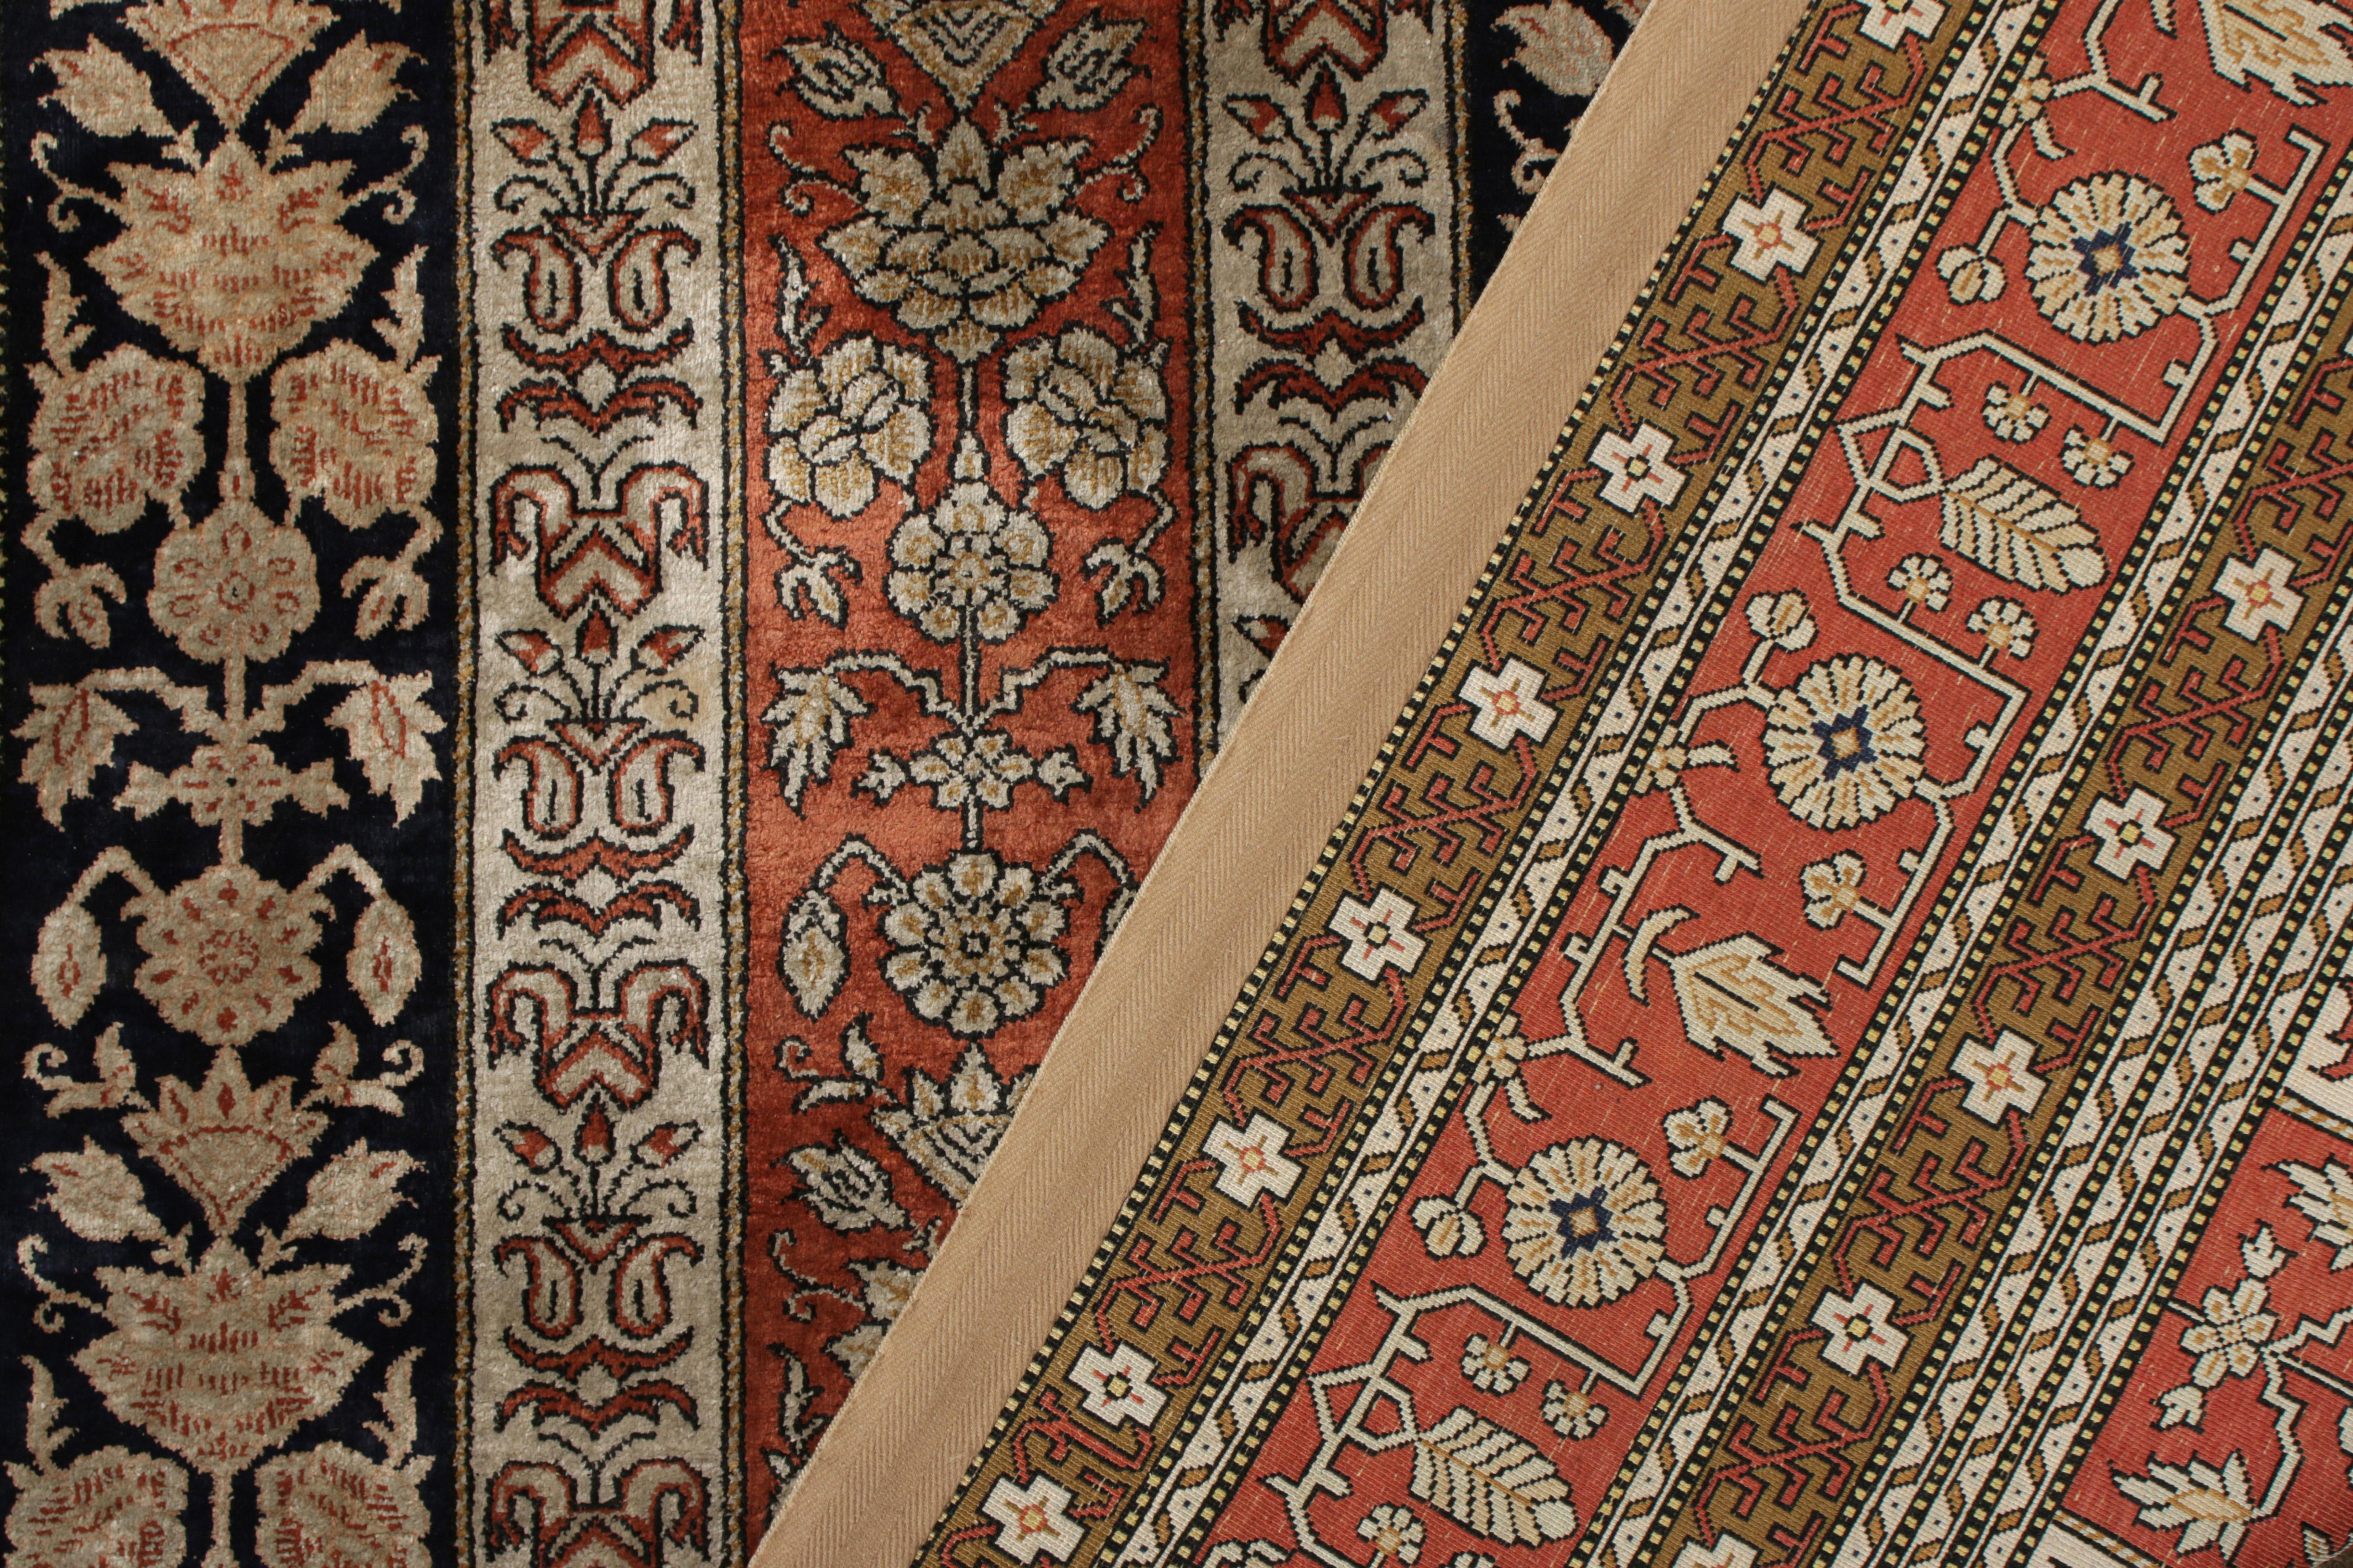 Mid-20th Century Vintage Persian Qum Rug Pair in Red & Beige-Brown Floral Pattern, by Rug & Kilim For Sale